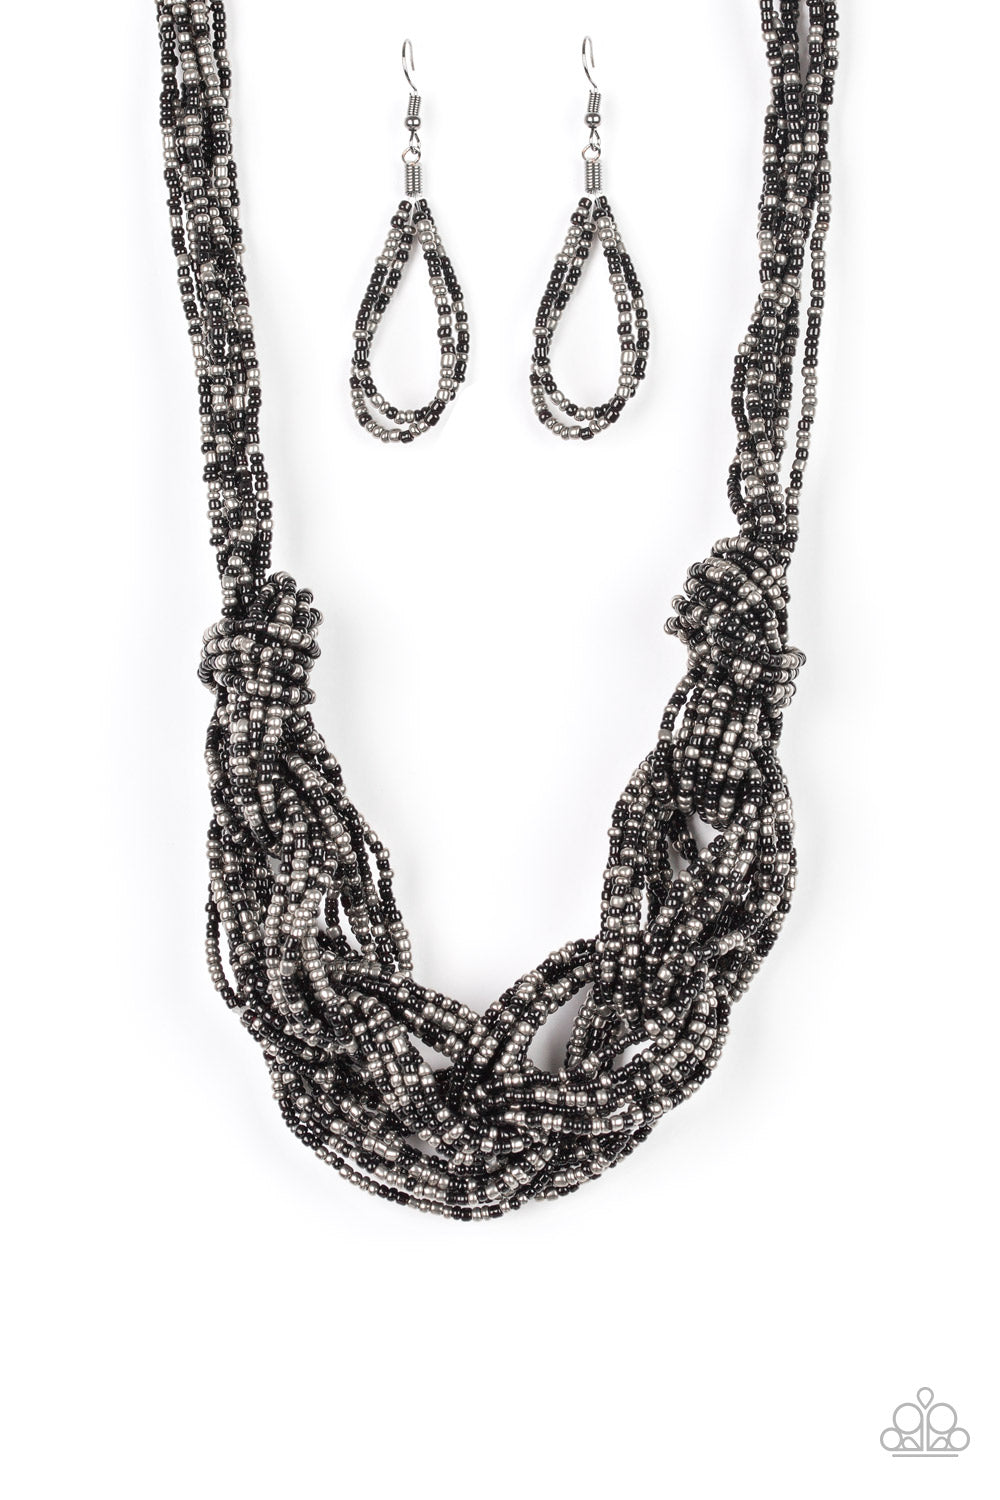 Paparazzi Accessories City Catwalk - Black Seedbead Necklaces - Lady T Accessories